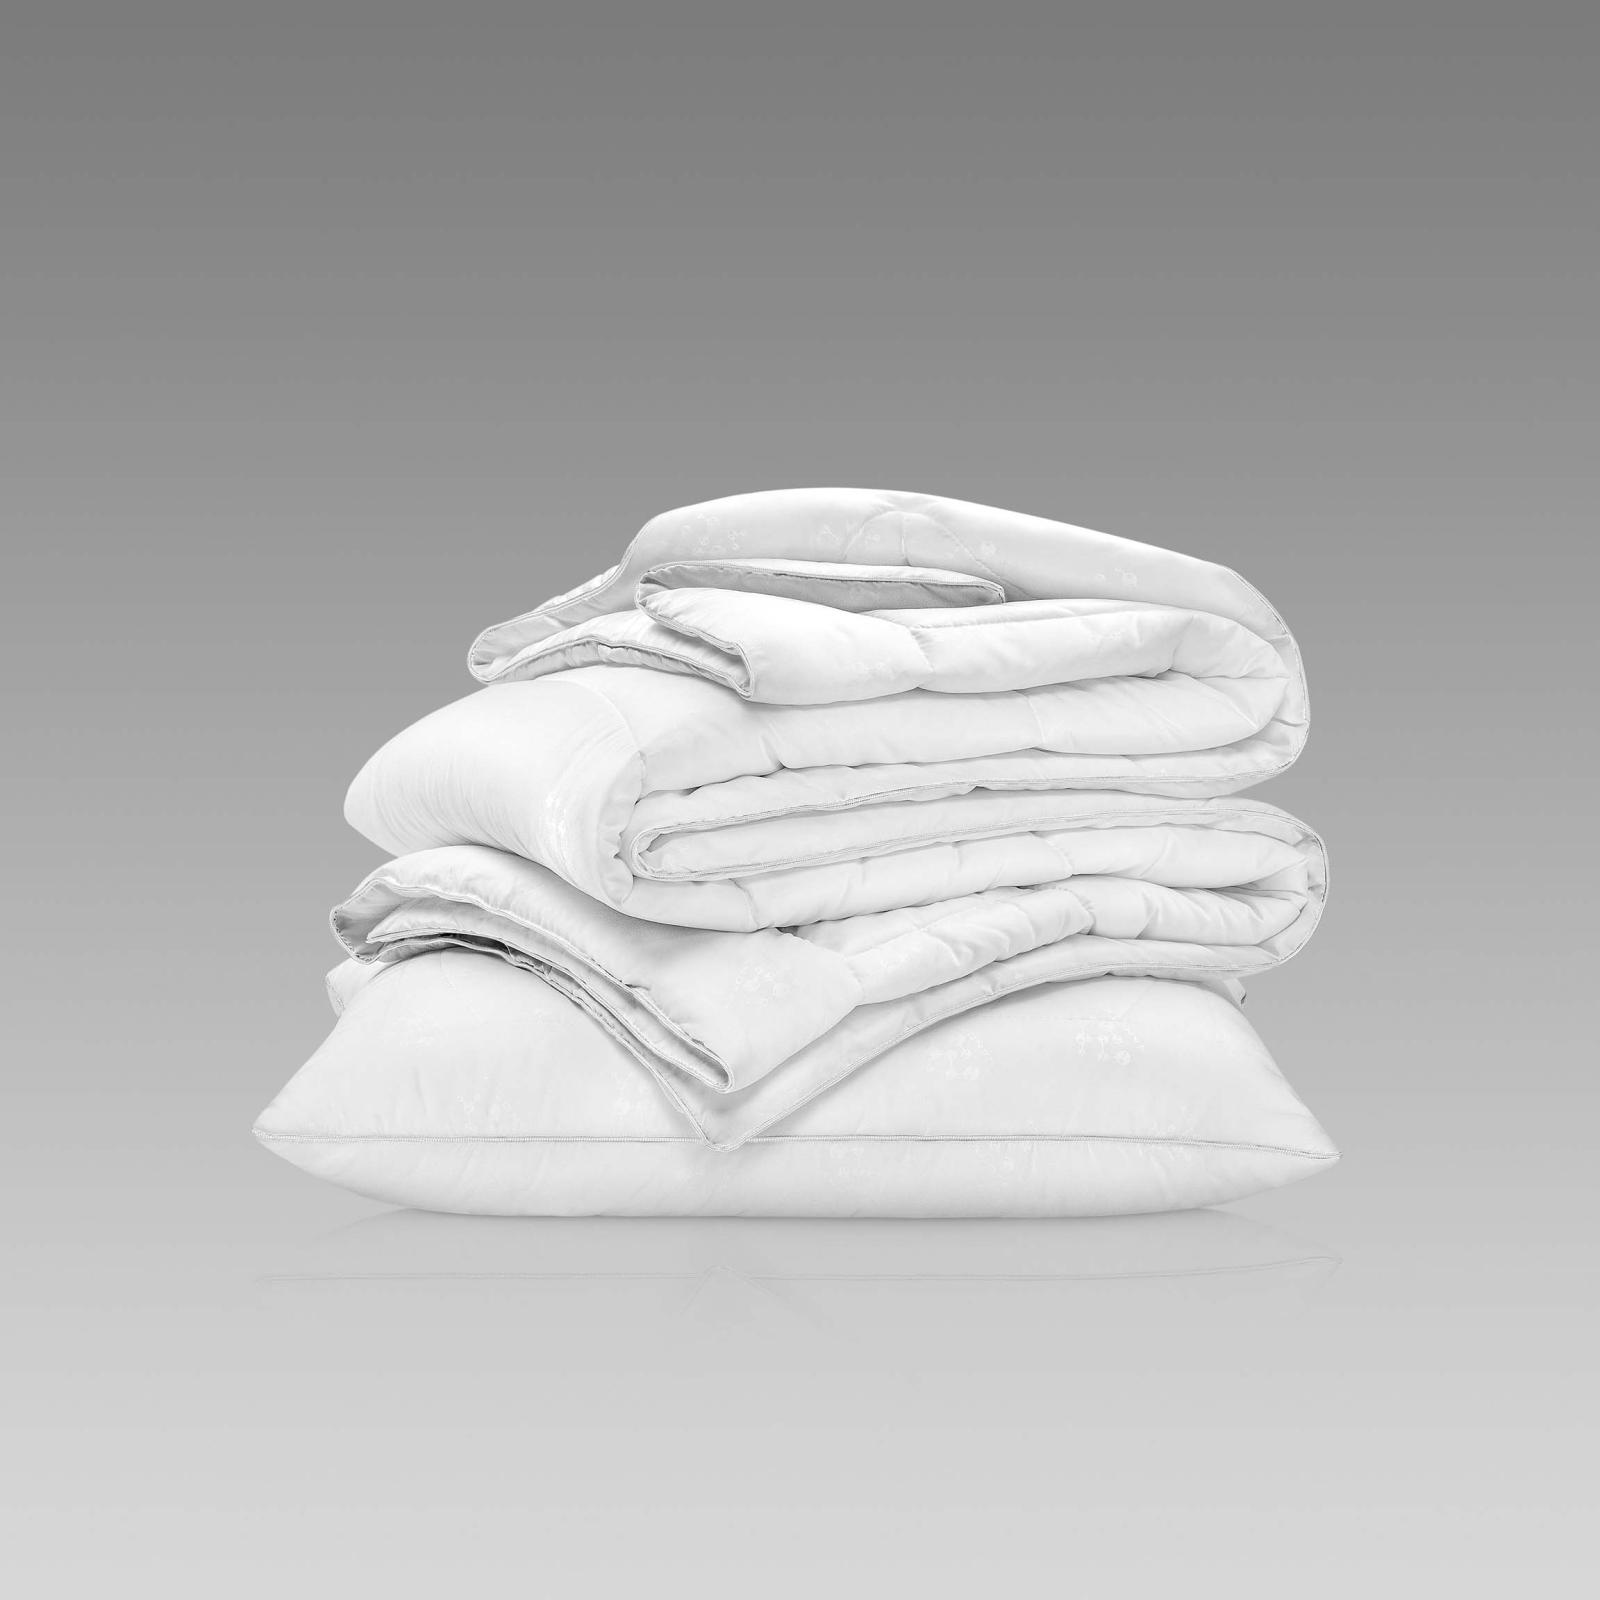 Одеяло Гелиос 140х200 см (20.04.12.0120), цвет белый, размер 140х200 см - фото 6